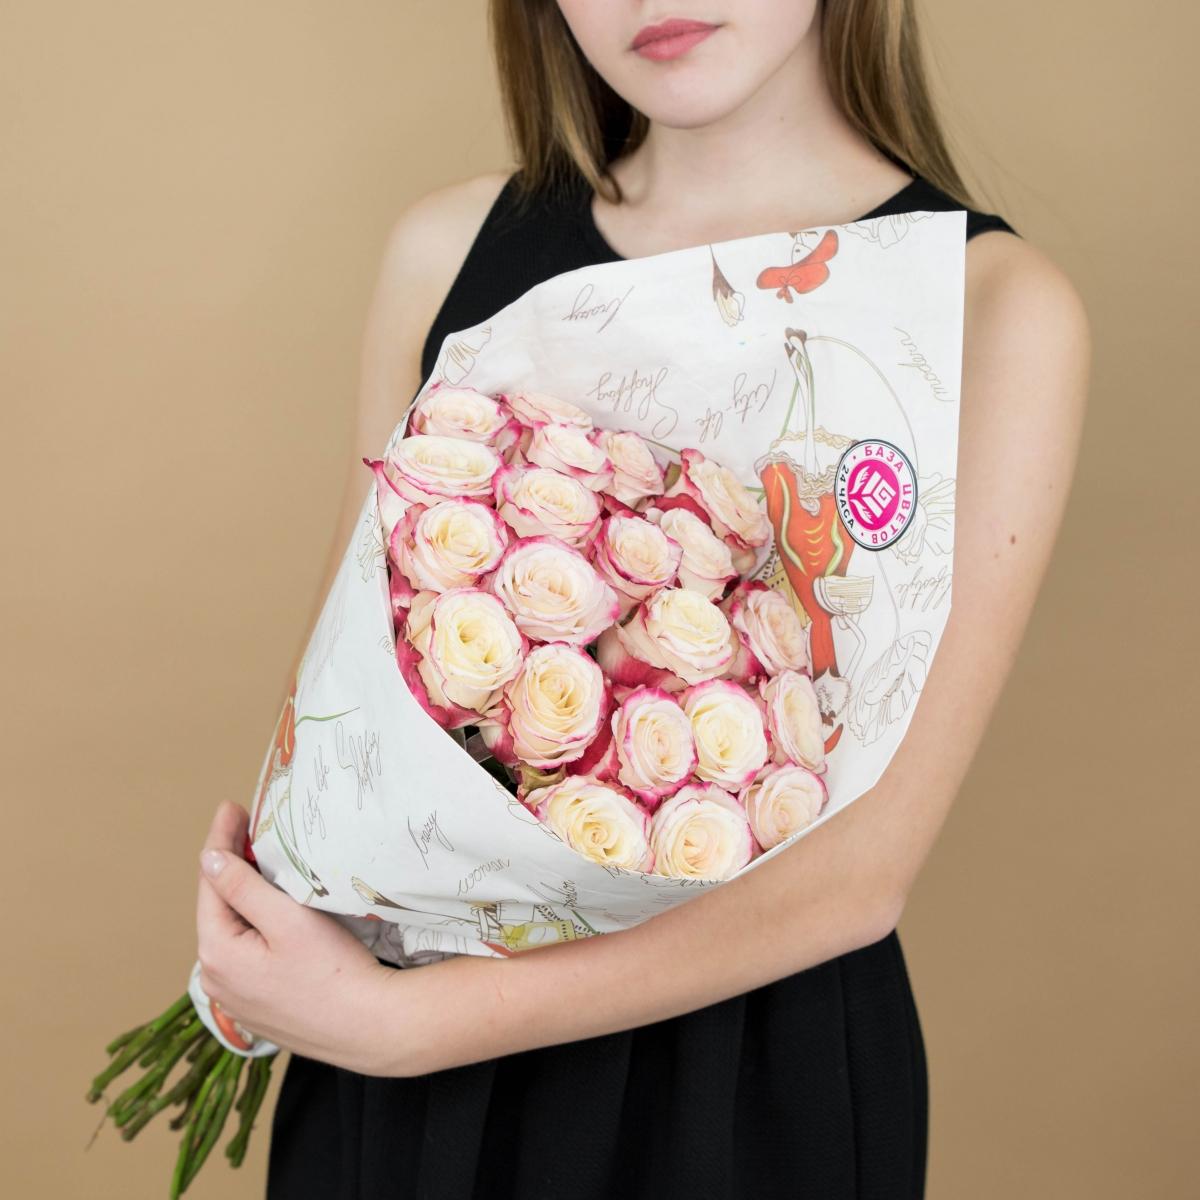 Розы красно-белые (40 см) Эквадор артикул букета  513ulan